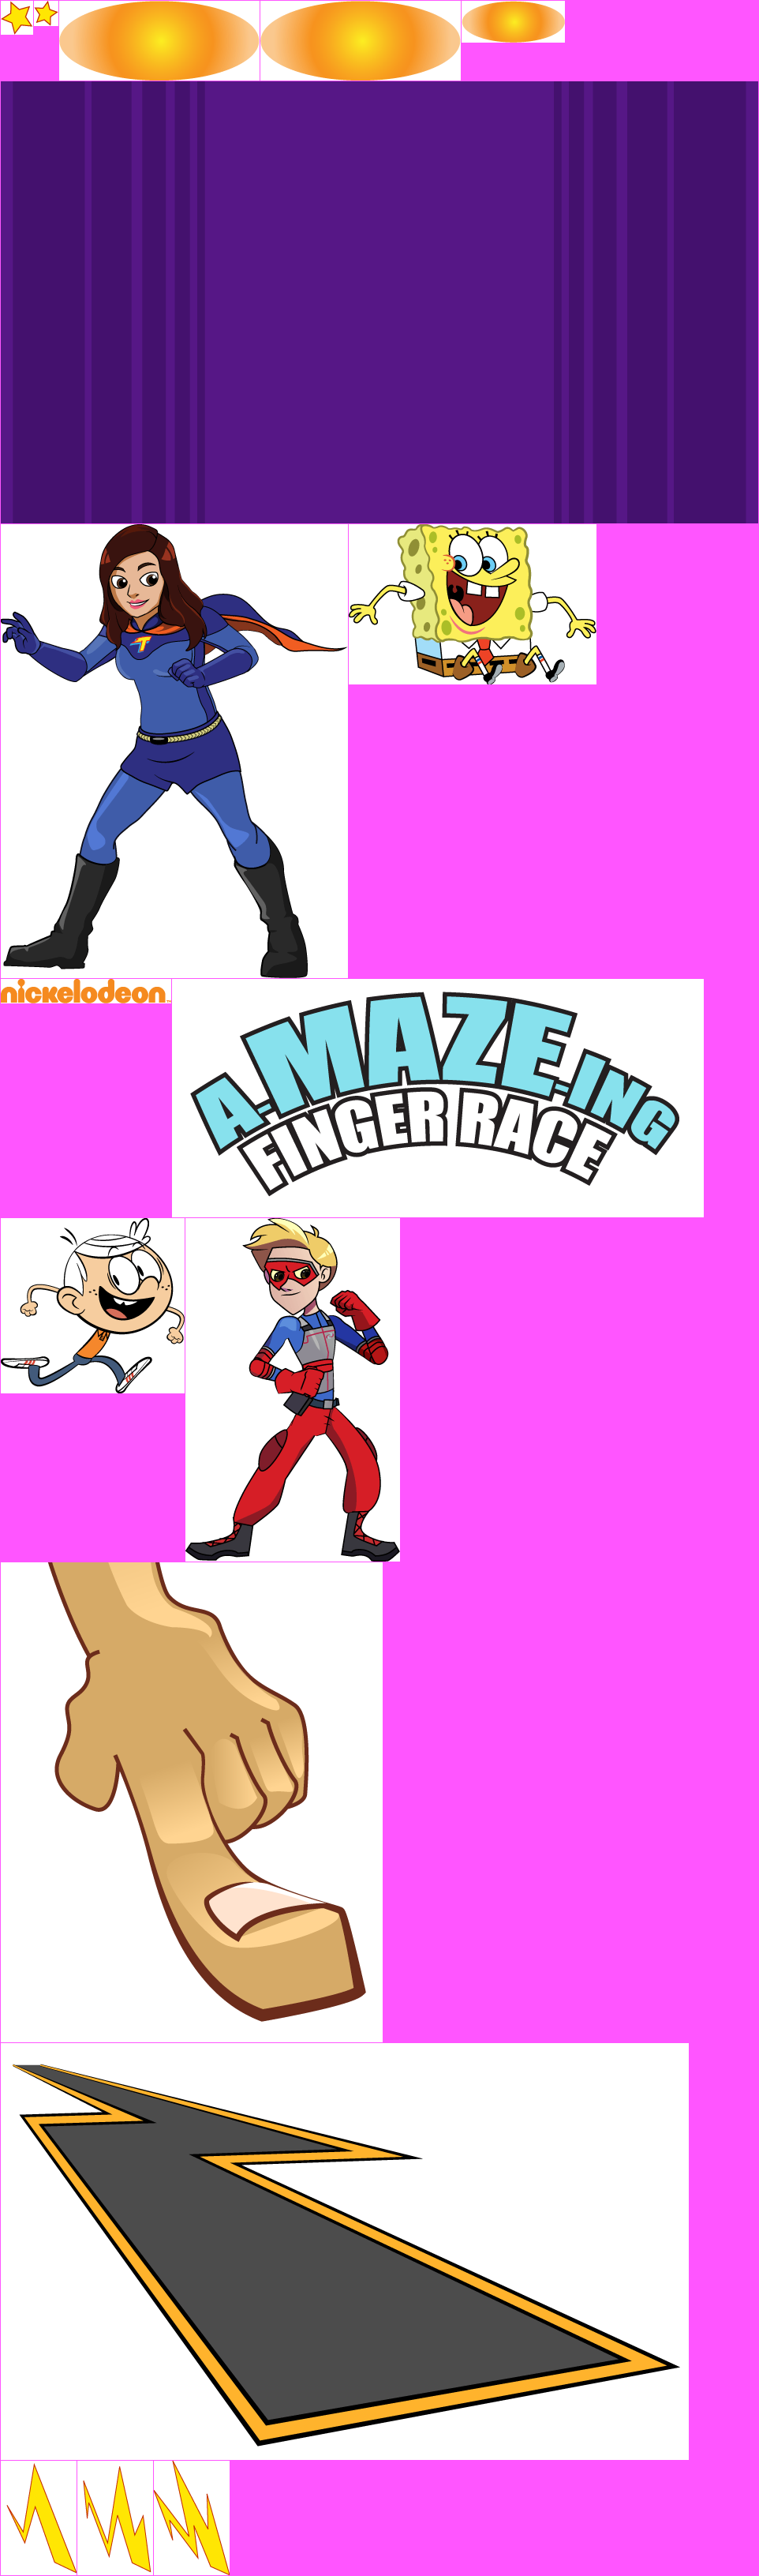 Nickelodeon: A-MAZE-ing Finger Race - Title Screen